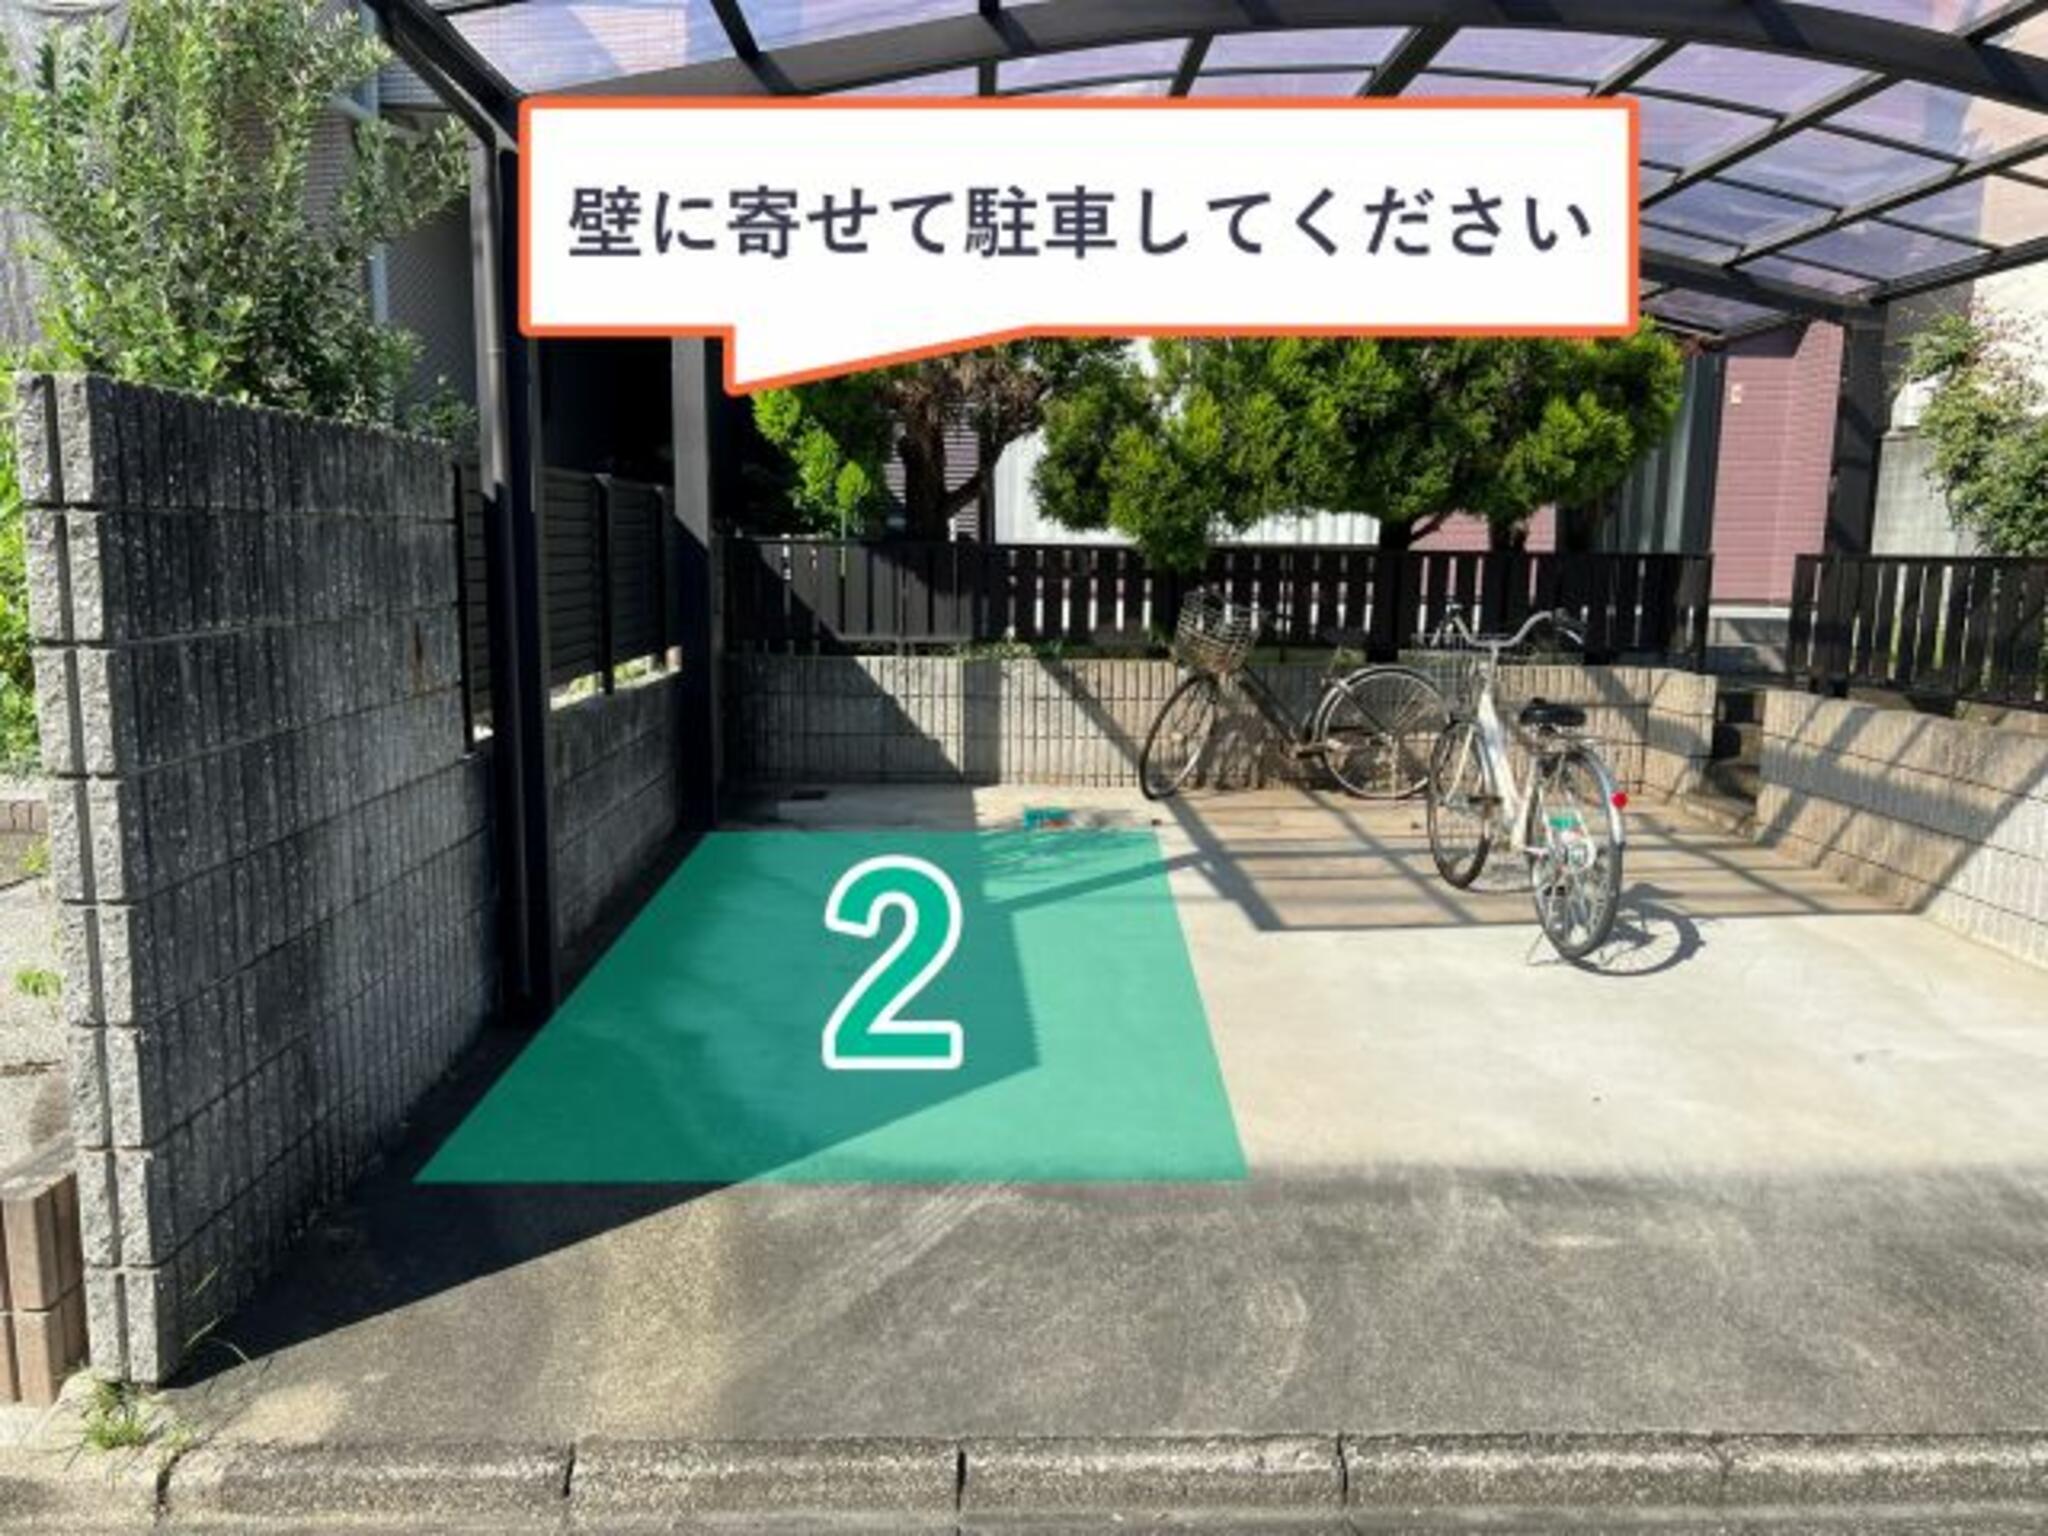 akippa駐車場:愛知県名古屋市千種区上野3丁目19-23の代表写真2